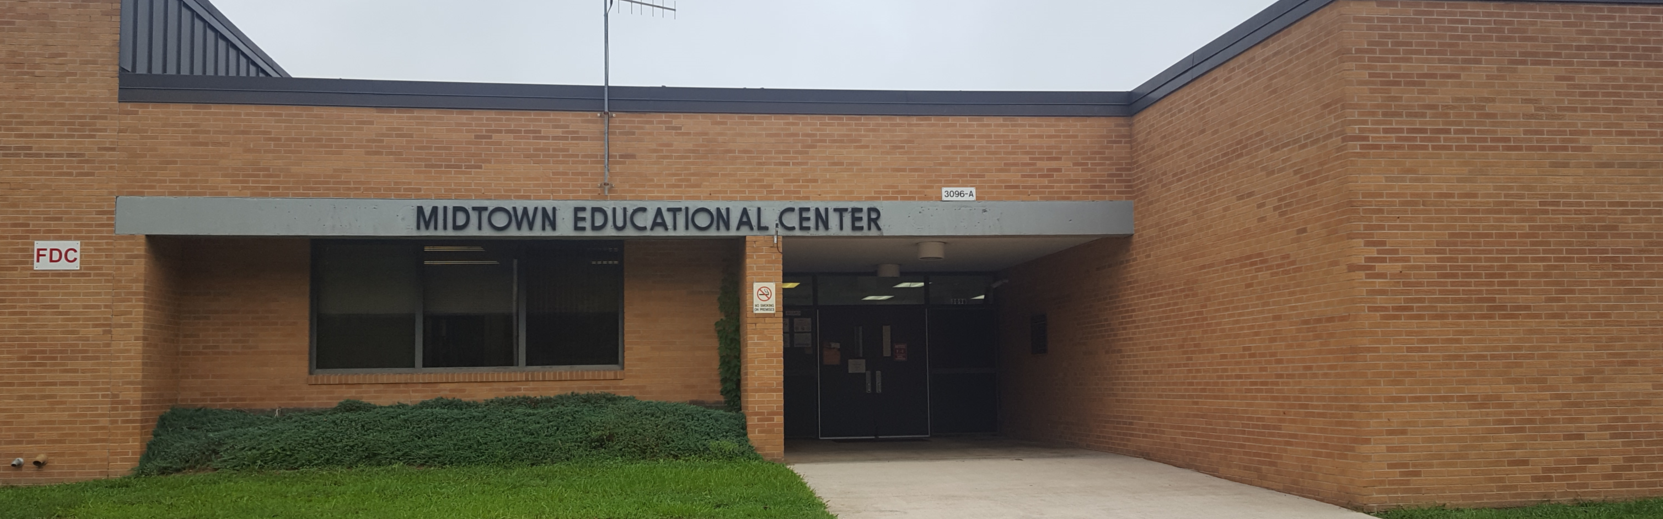 Midtown Education Center front entrance